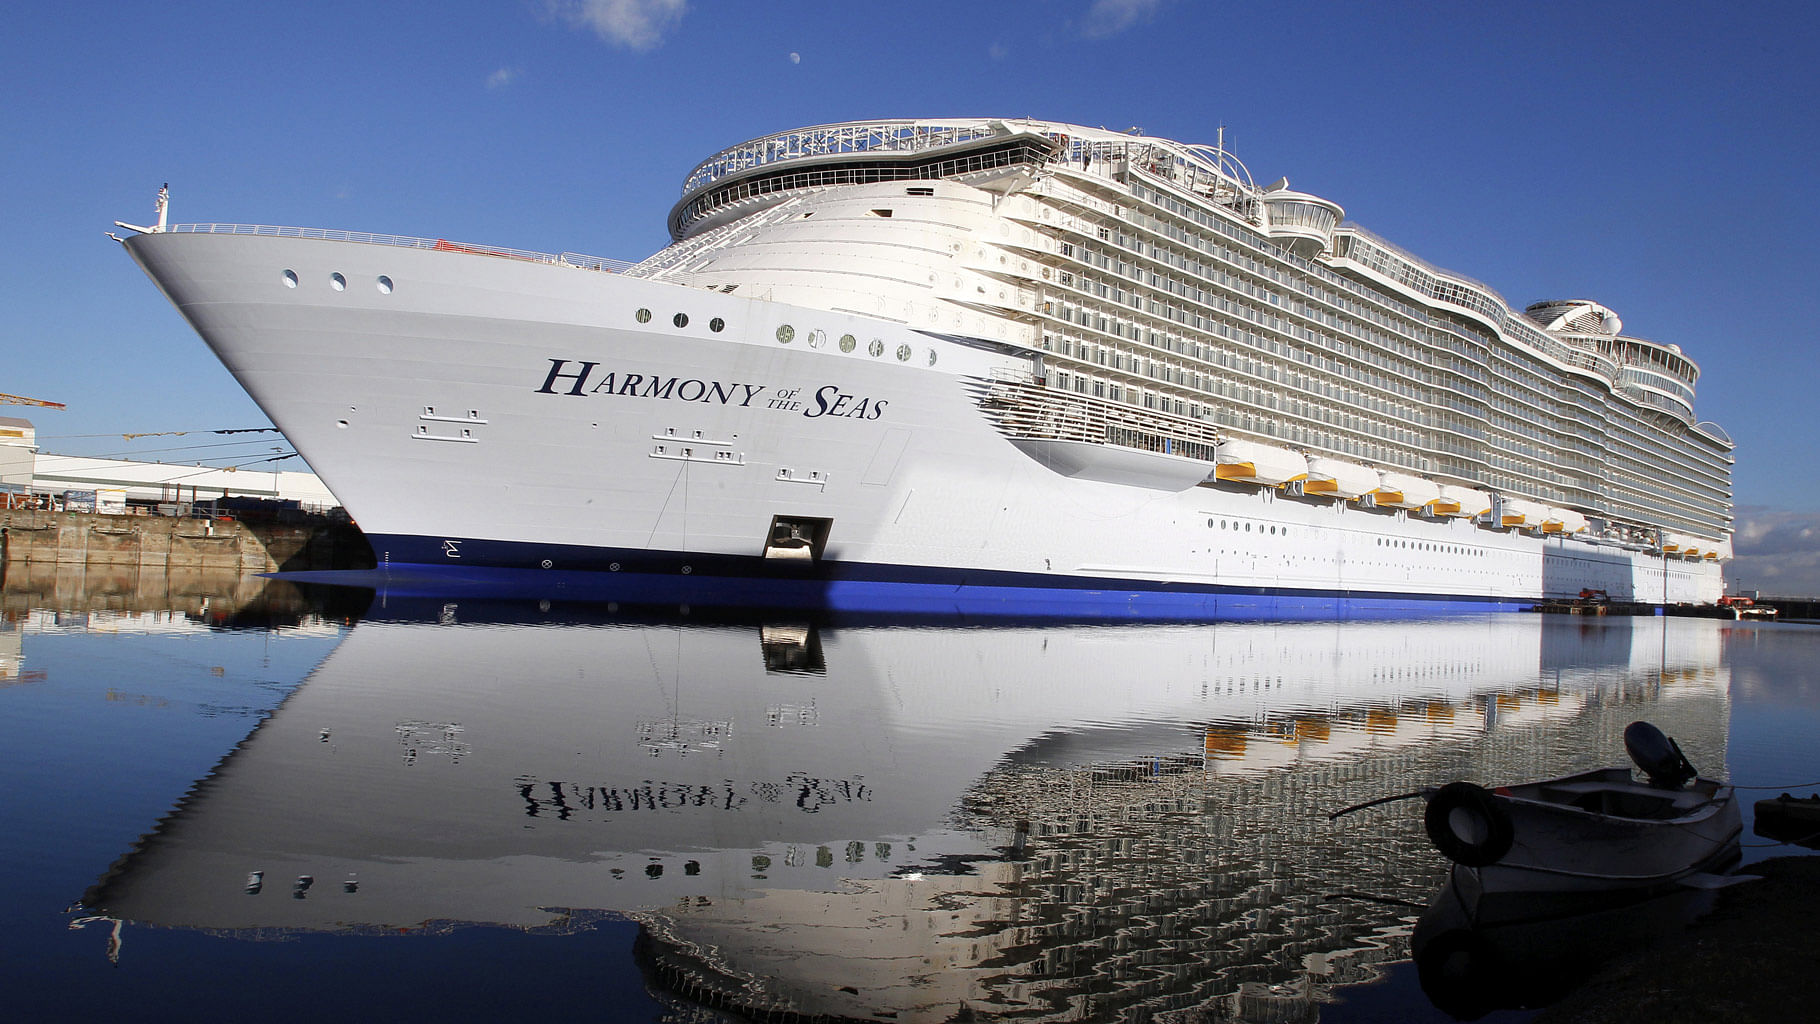 The gargantuan cruise ship cuts a majestic figure. (Photo: AP)